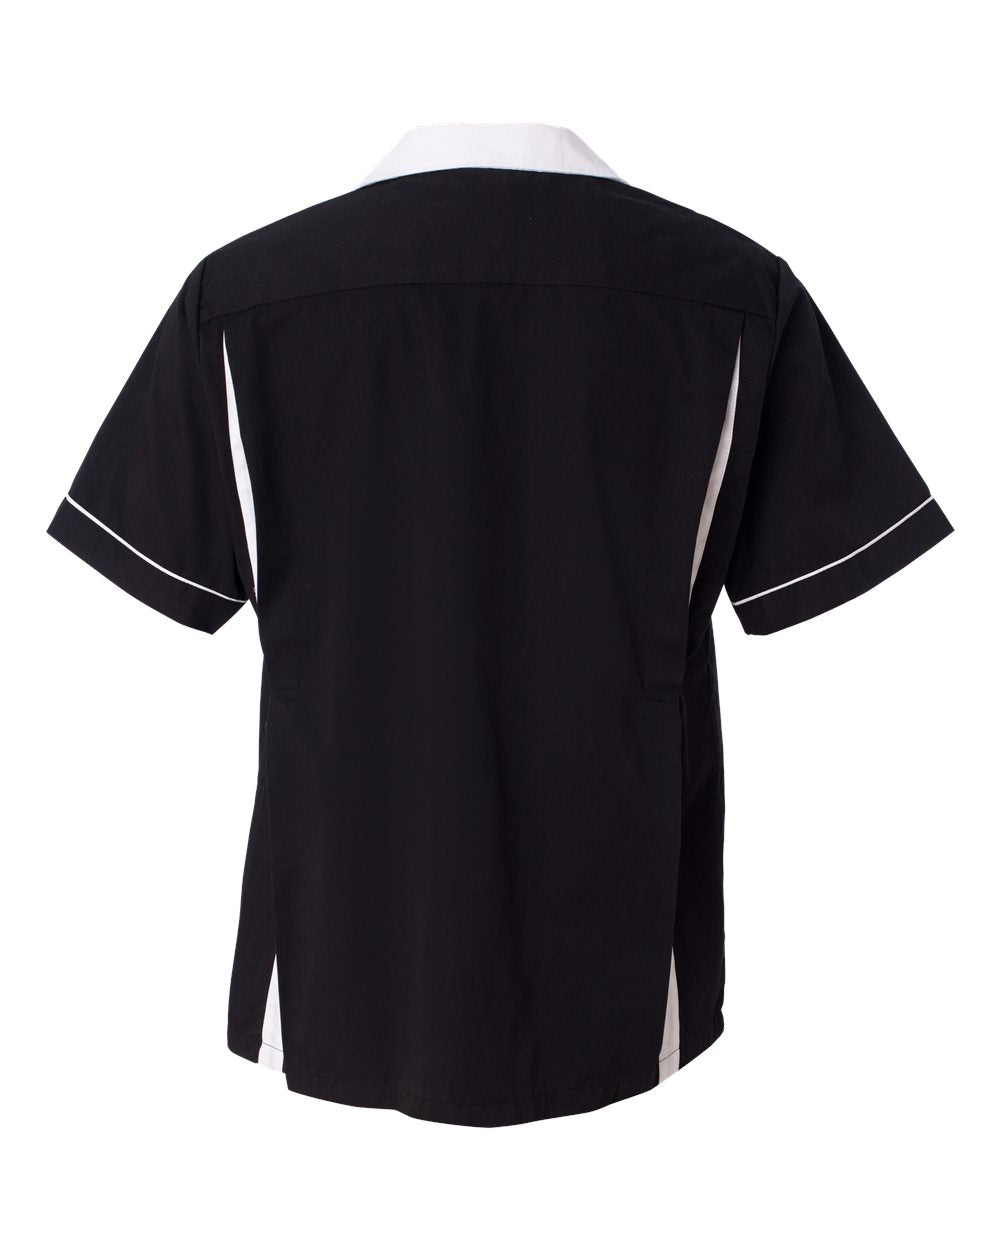 Custom Made Hilton HP2244 Turquoise and Black Bowling Shirt 